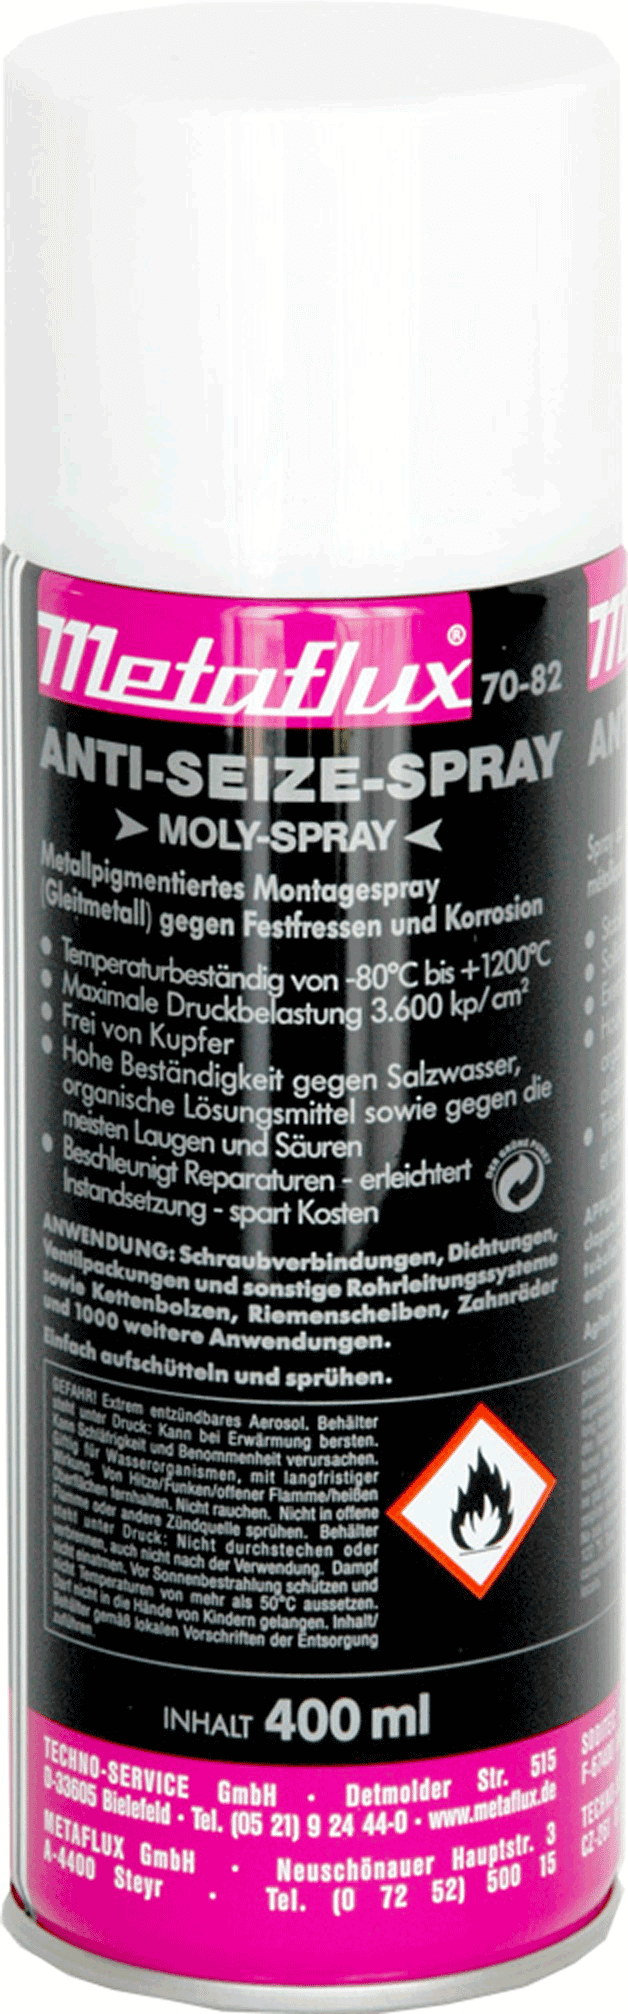 70-82 Metaflux Molyspray